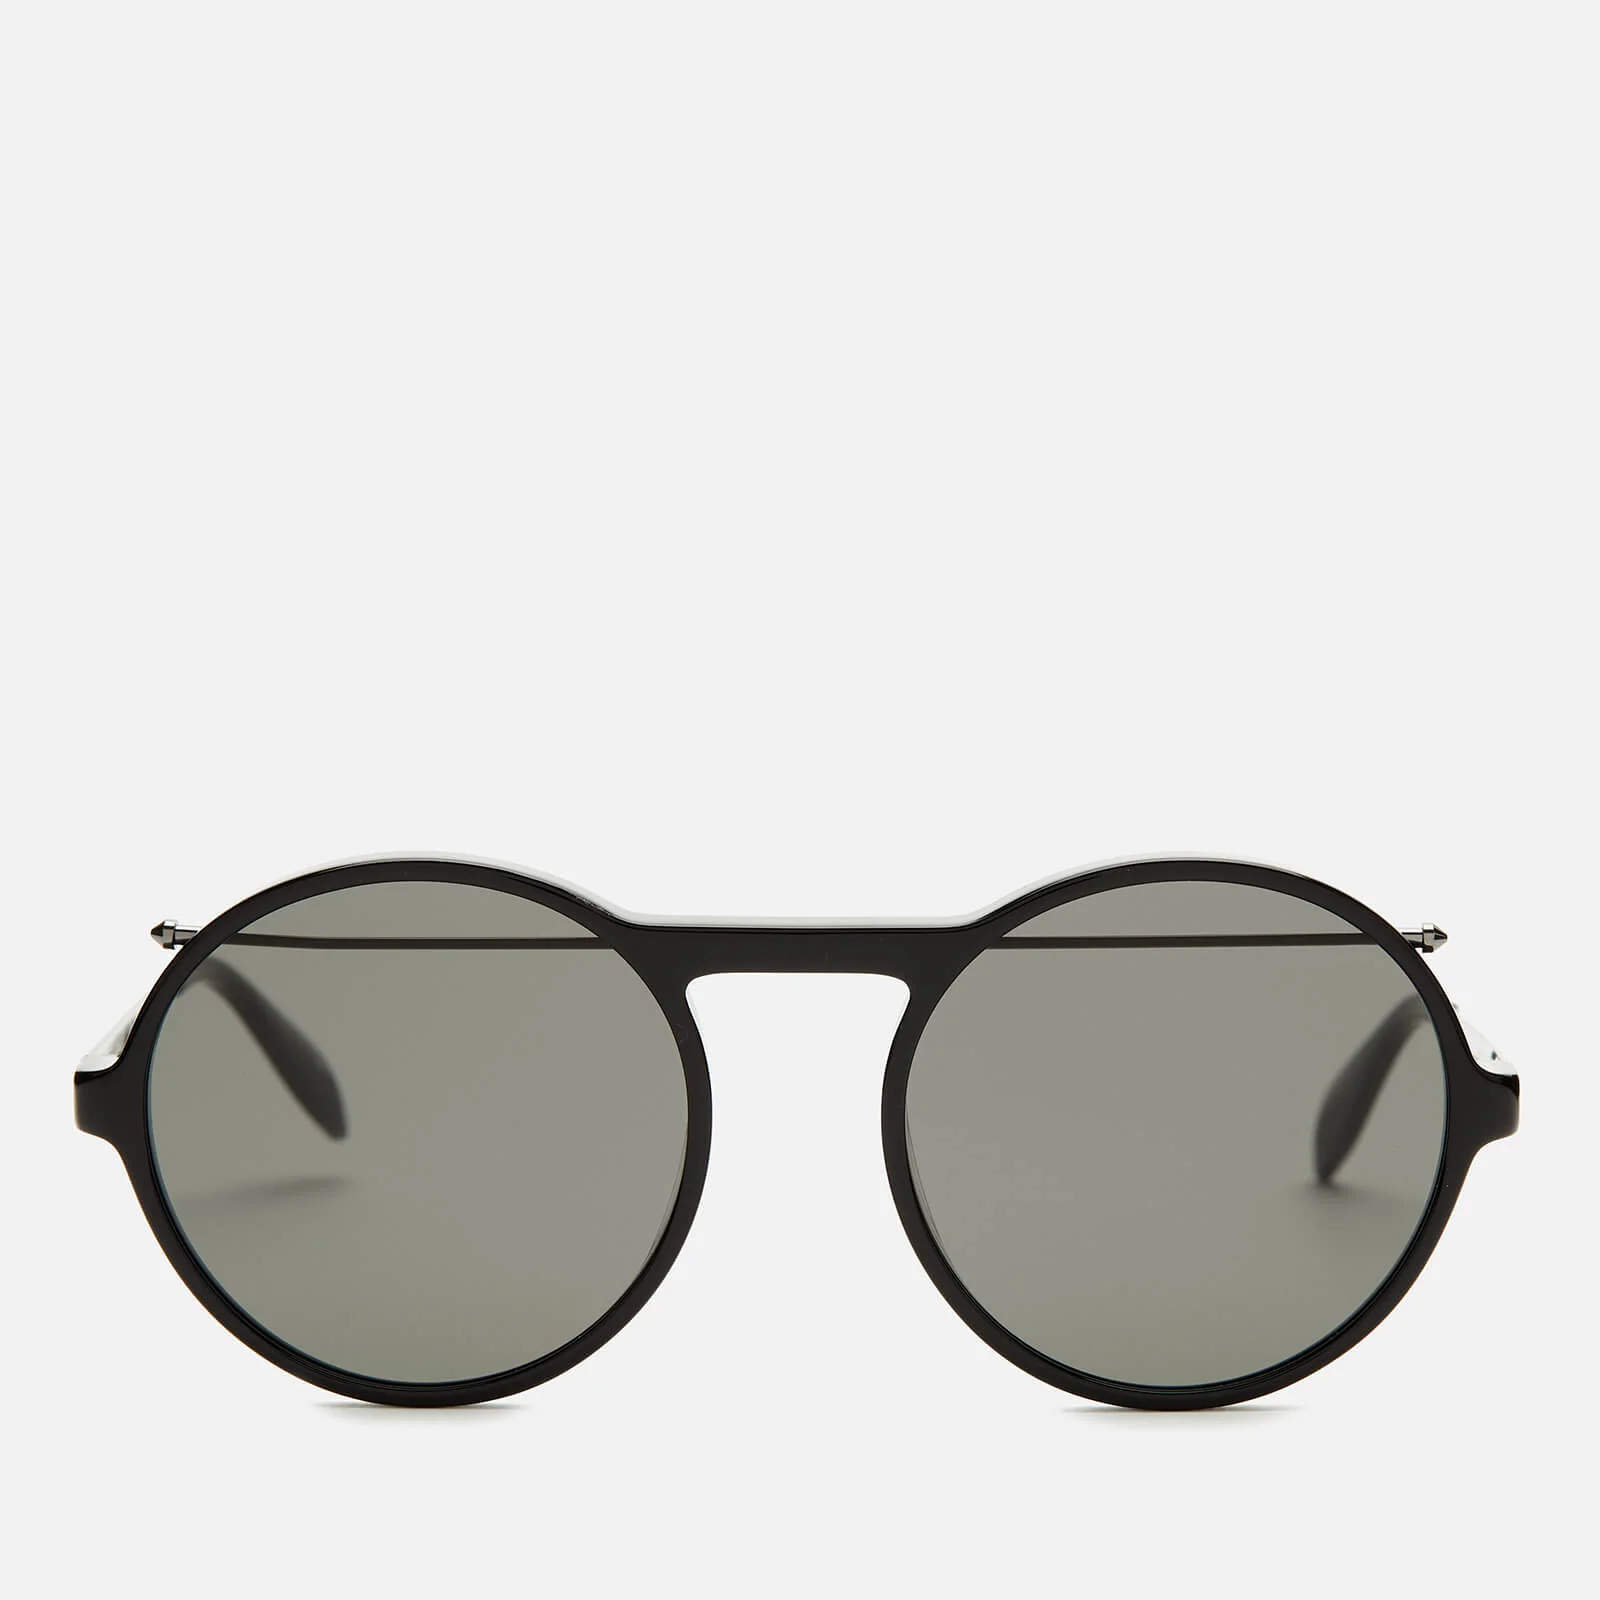 Alexander McQueen Men's Metal Round Frame Sunglasses - Black Image 1